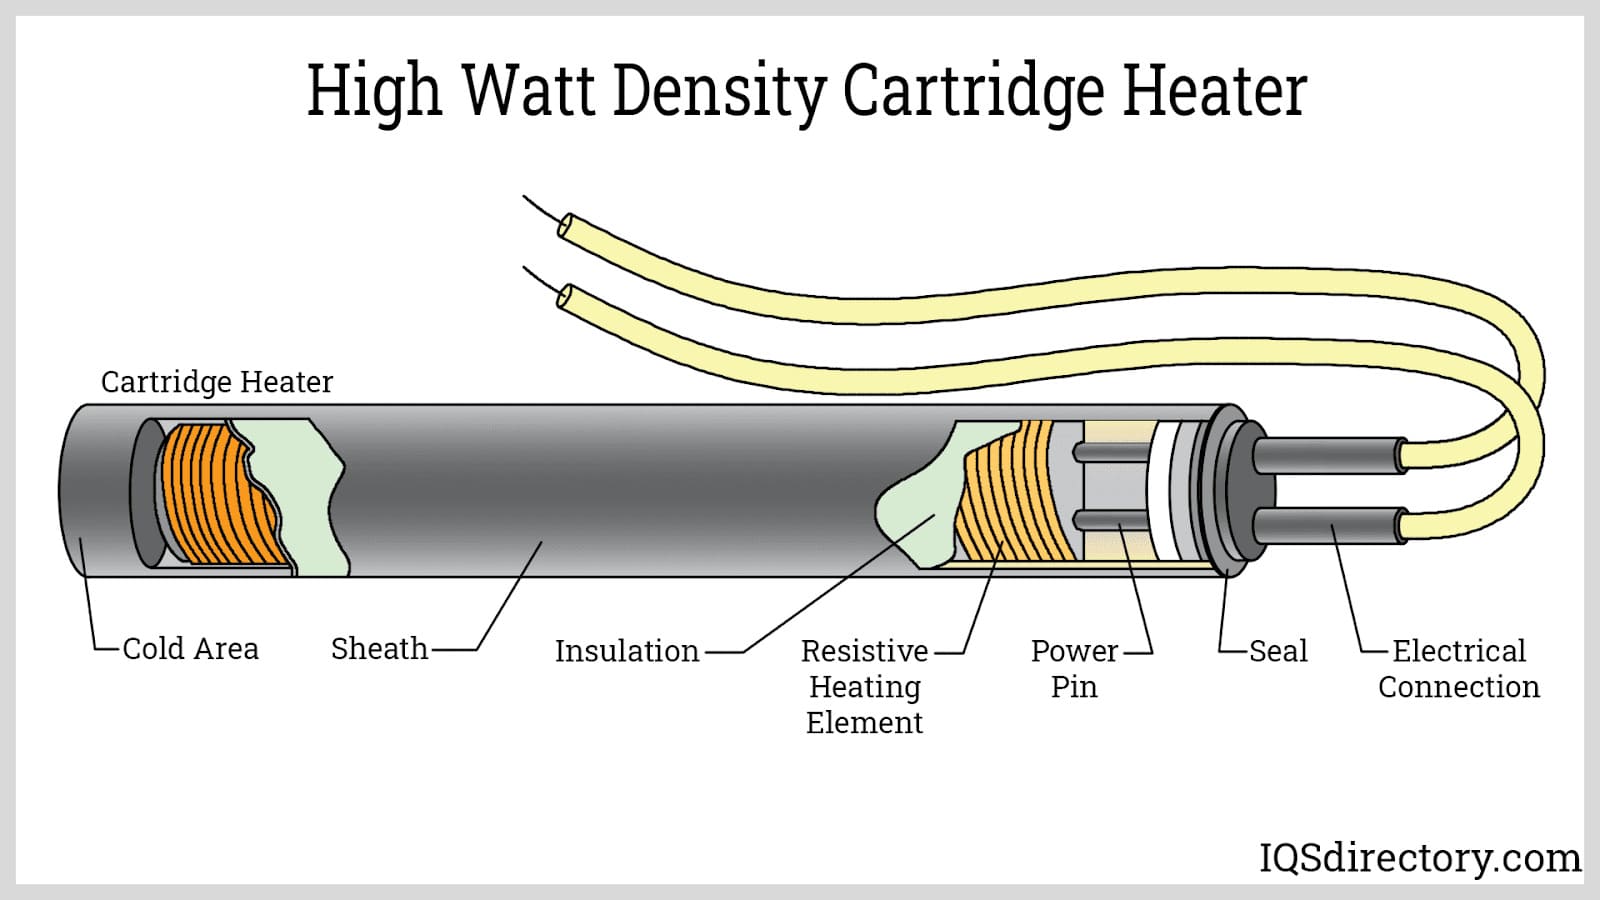 High Watt Density Cartridge Heater